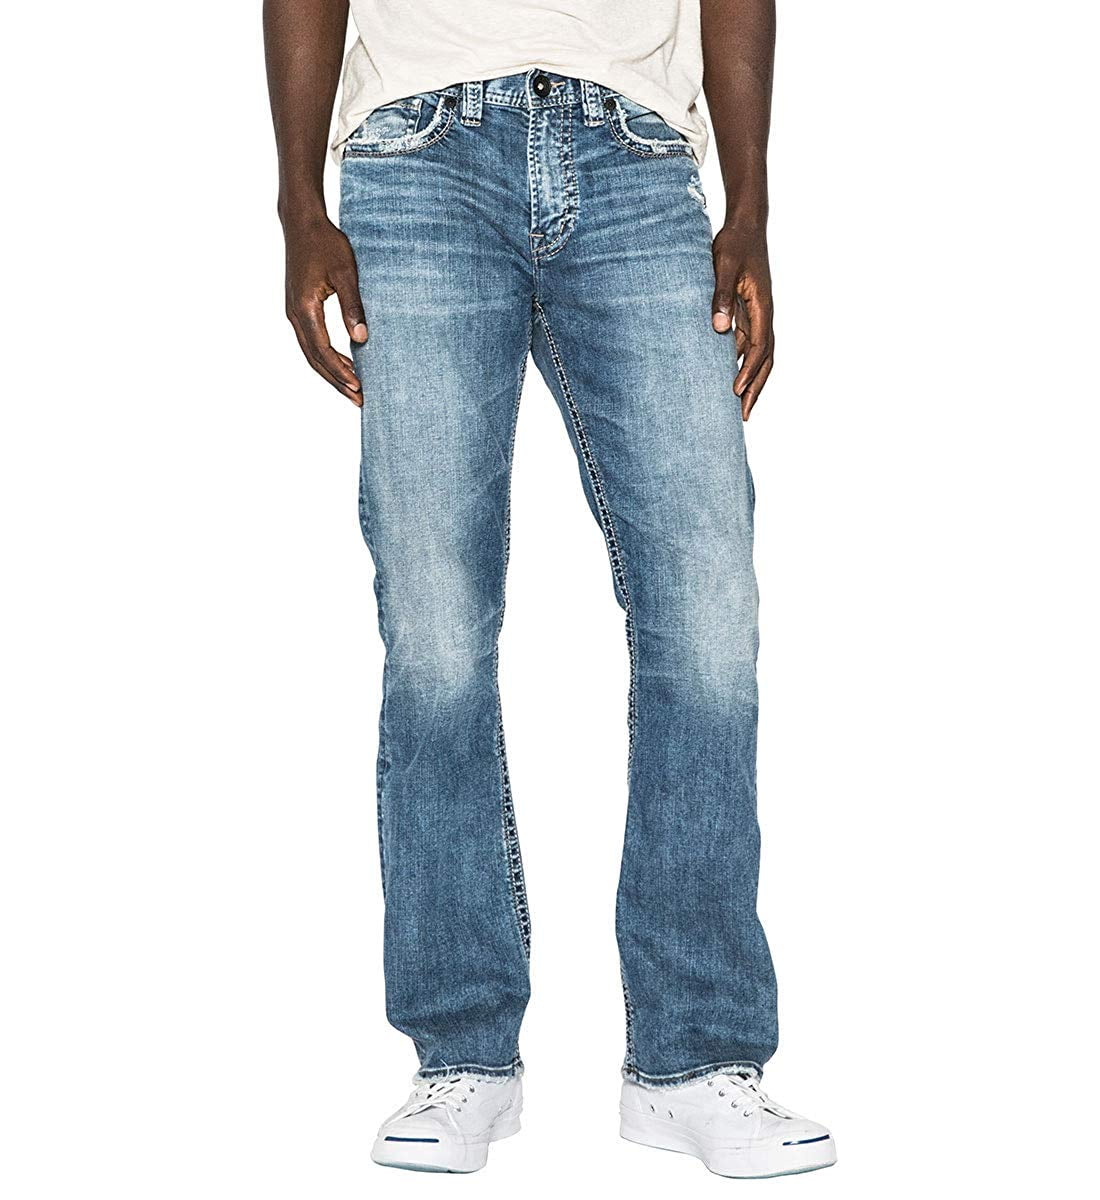 38 size jeans mens